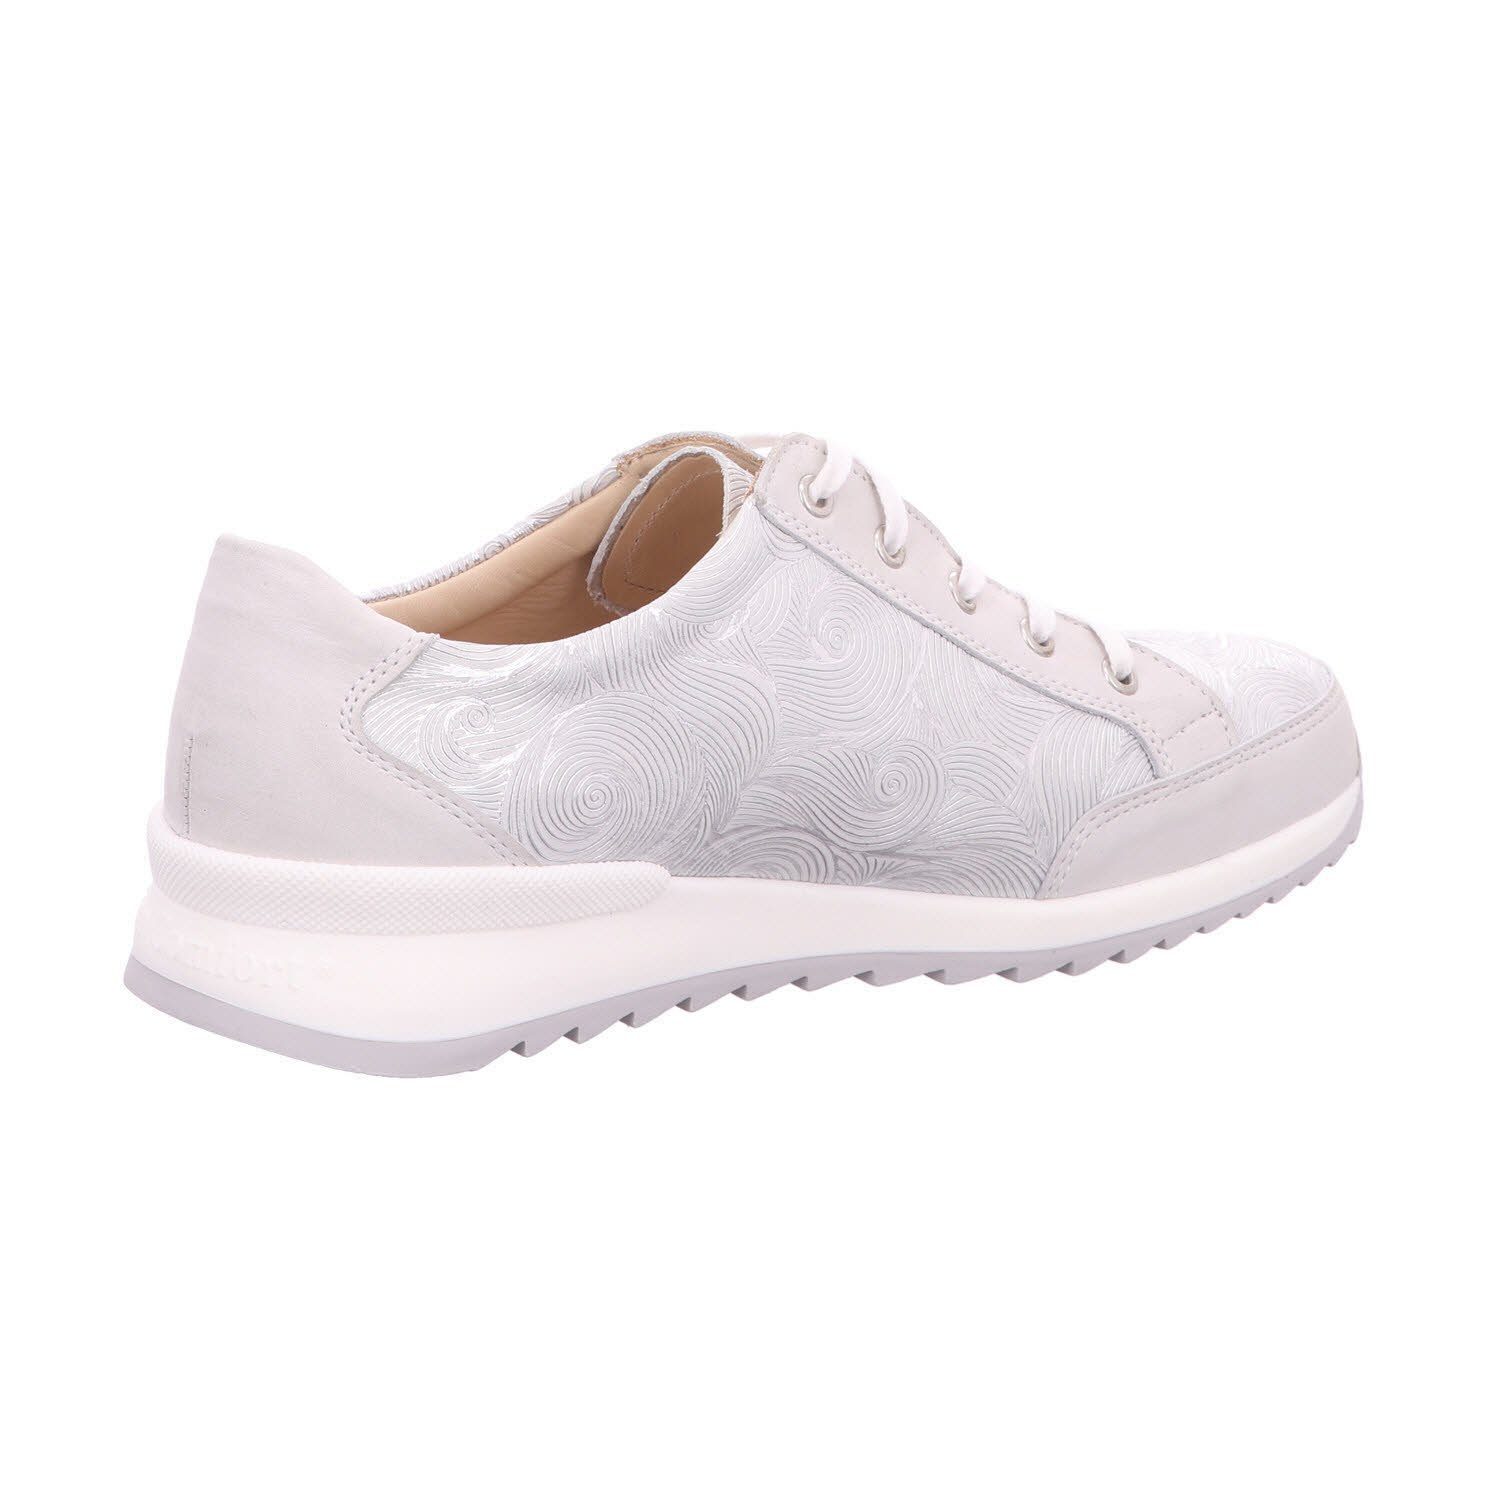 Finn Comfort bianco/flour Sneaker